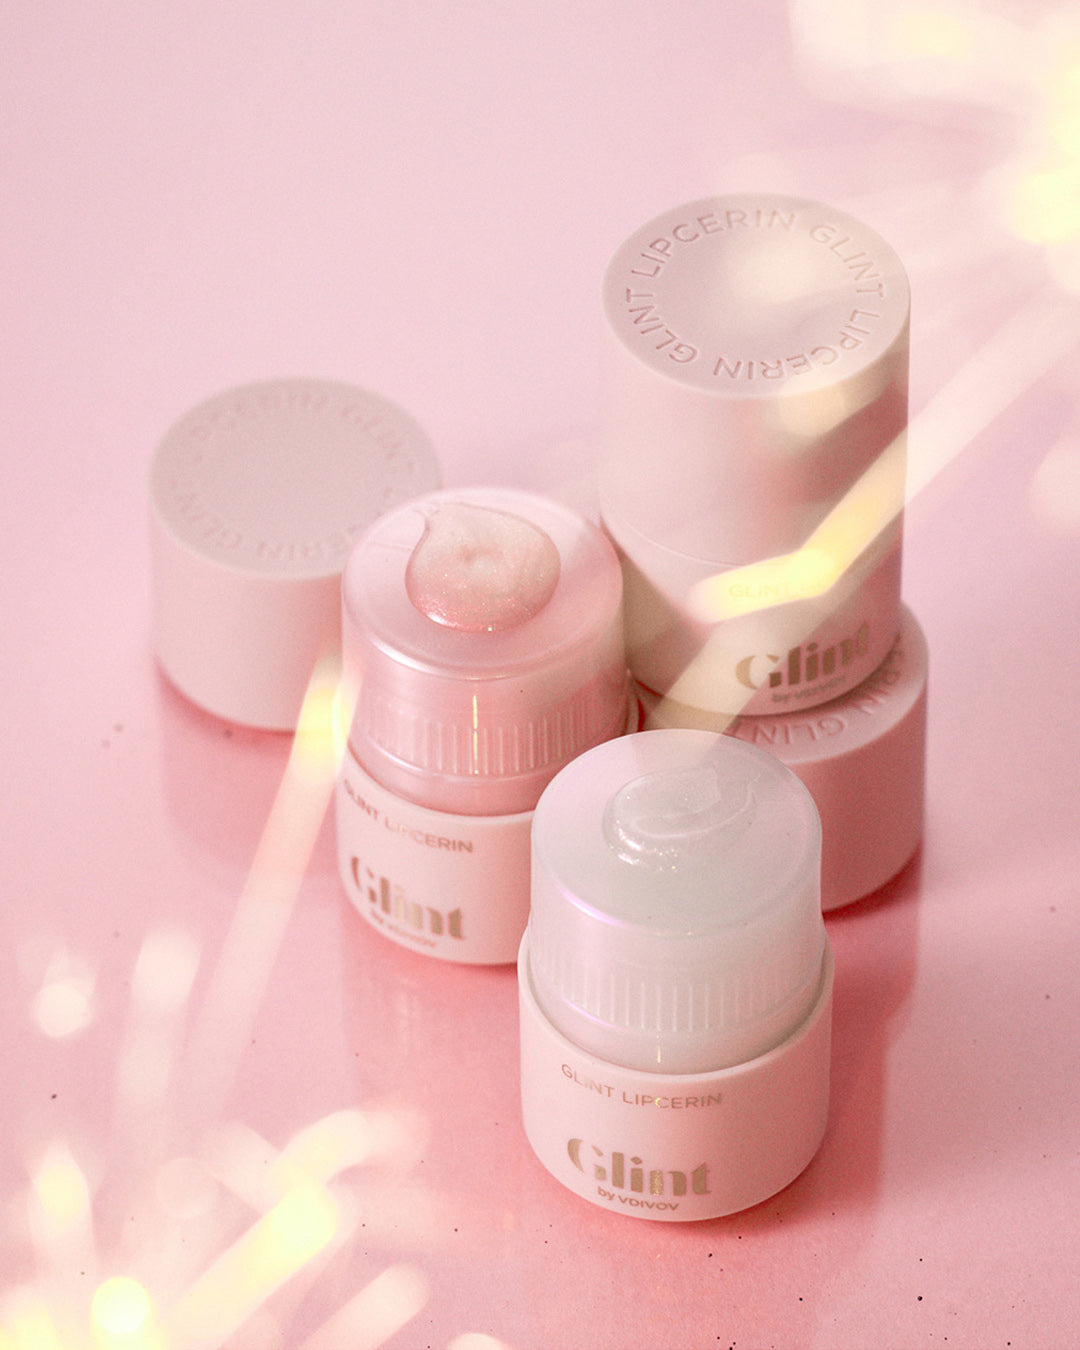 Glint Lipcerin 15ml makes your lips glow and shine